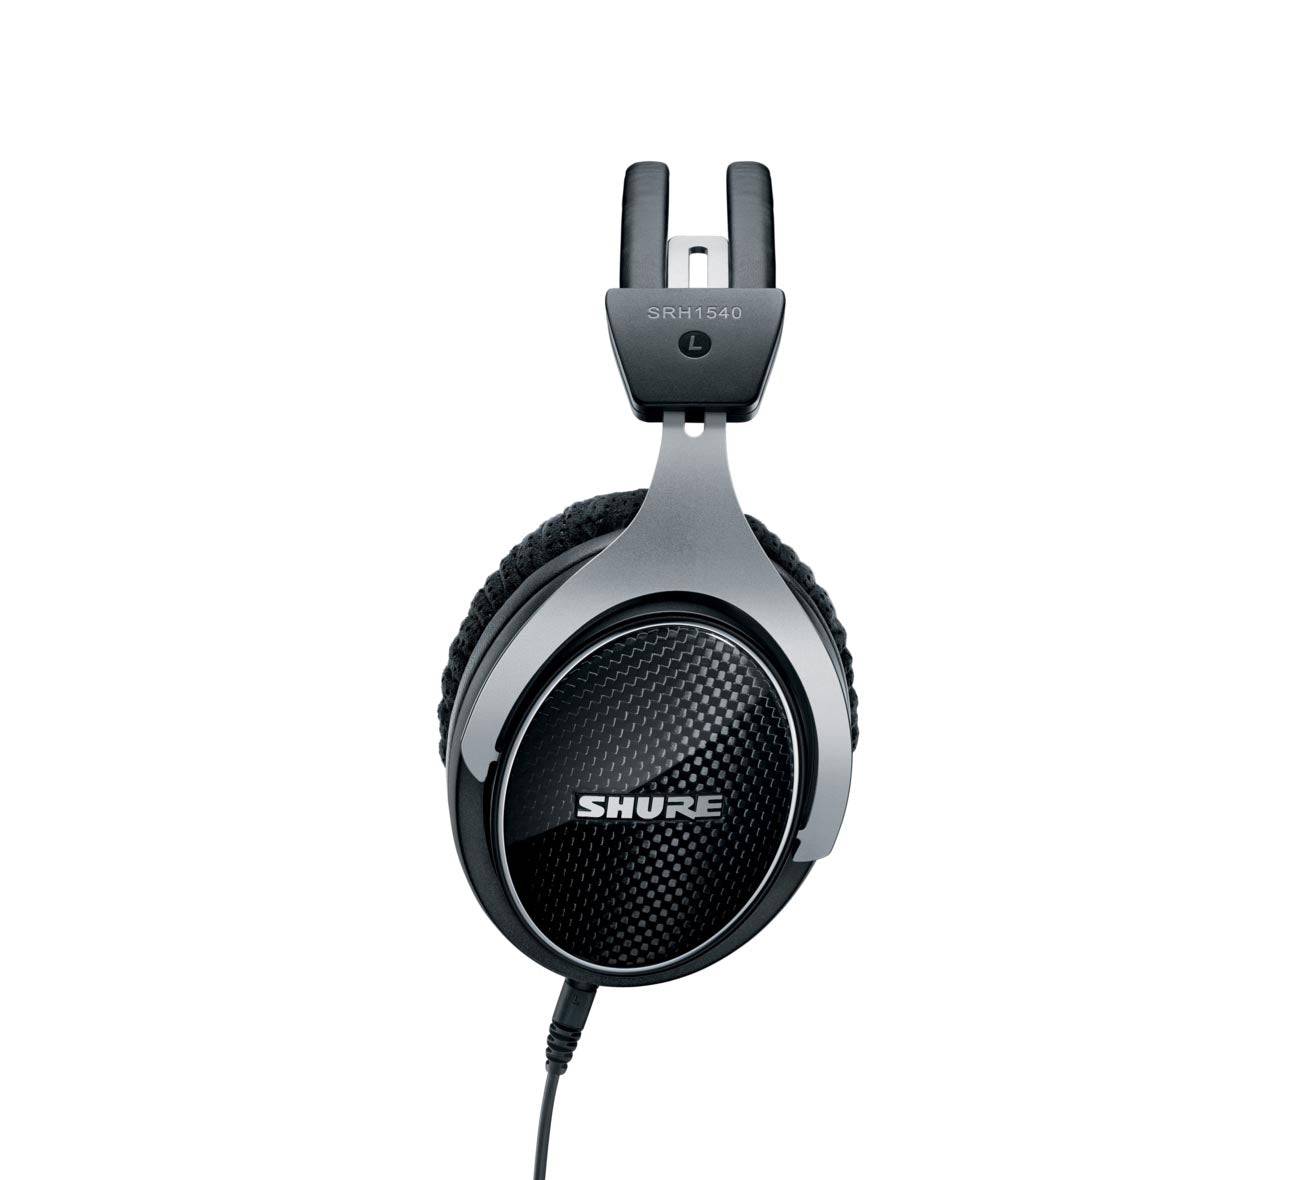 Shure SRH1540-BK Premium Closed-Back Headphones - Black - Hollywood DJ